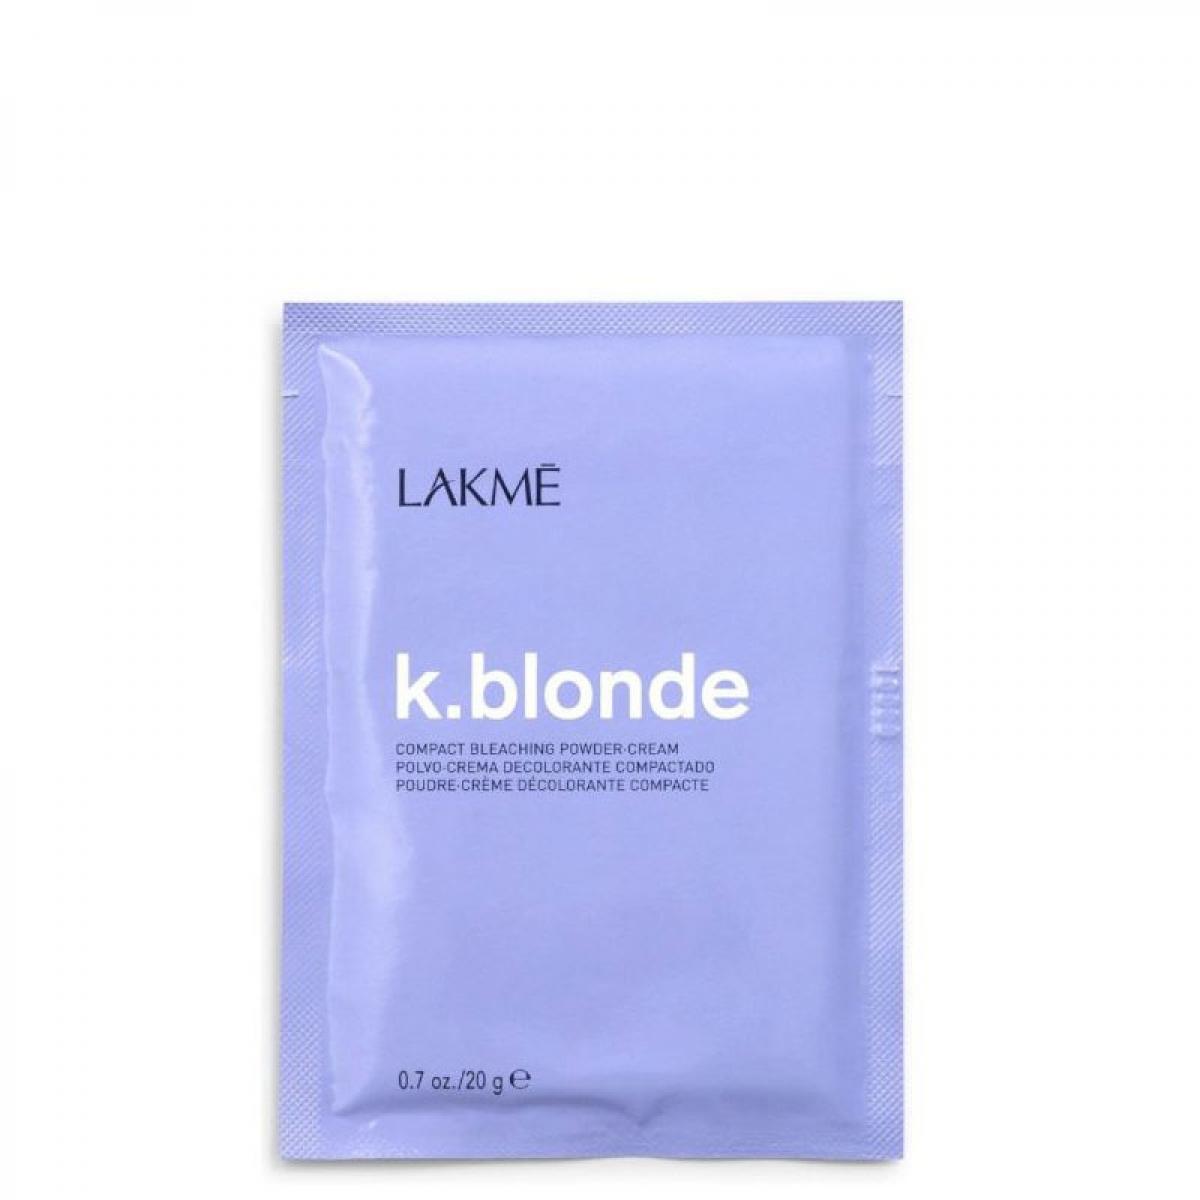 پودر دکلره کی بلوند 20 گرمی - k.blonde compact powder